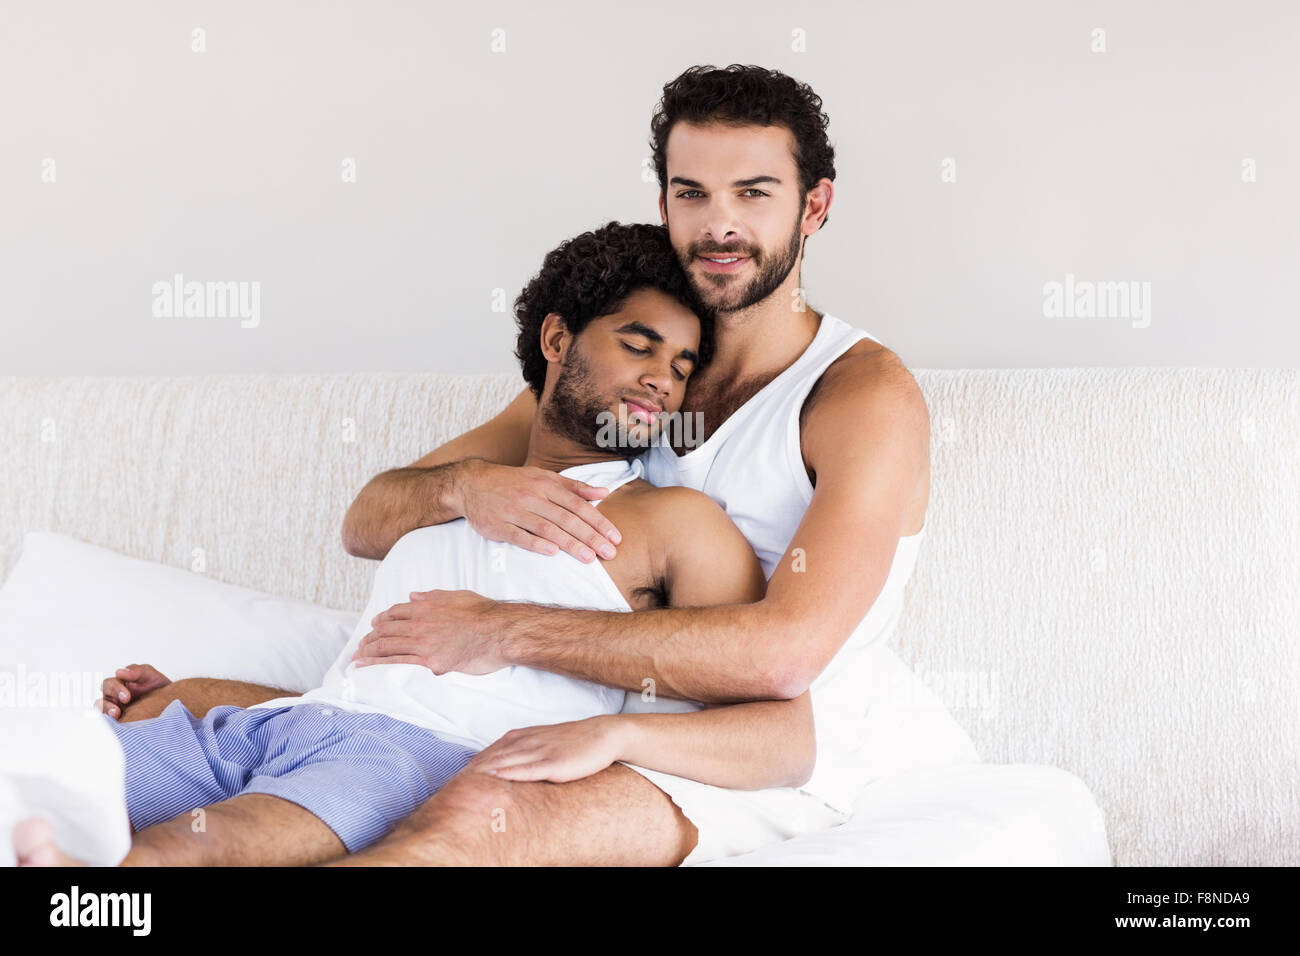 Smiling man hugging his sleepy partner Stock Photo